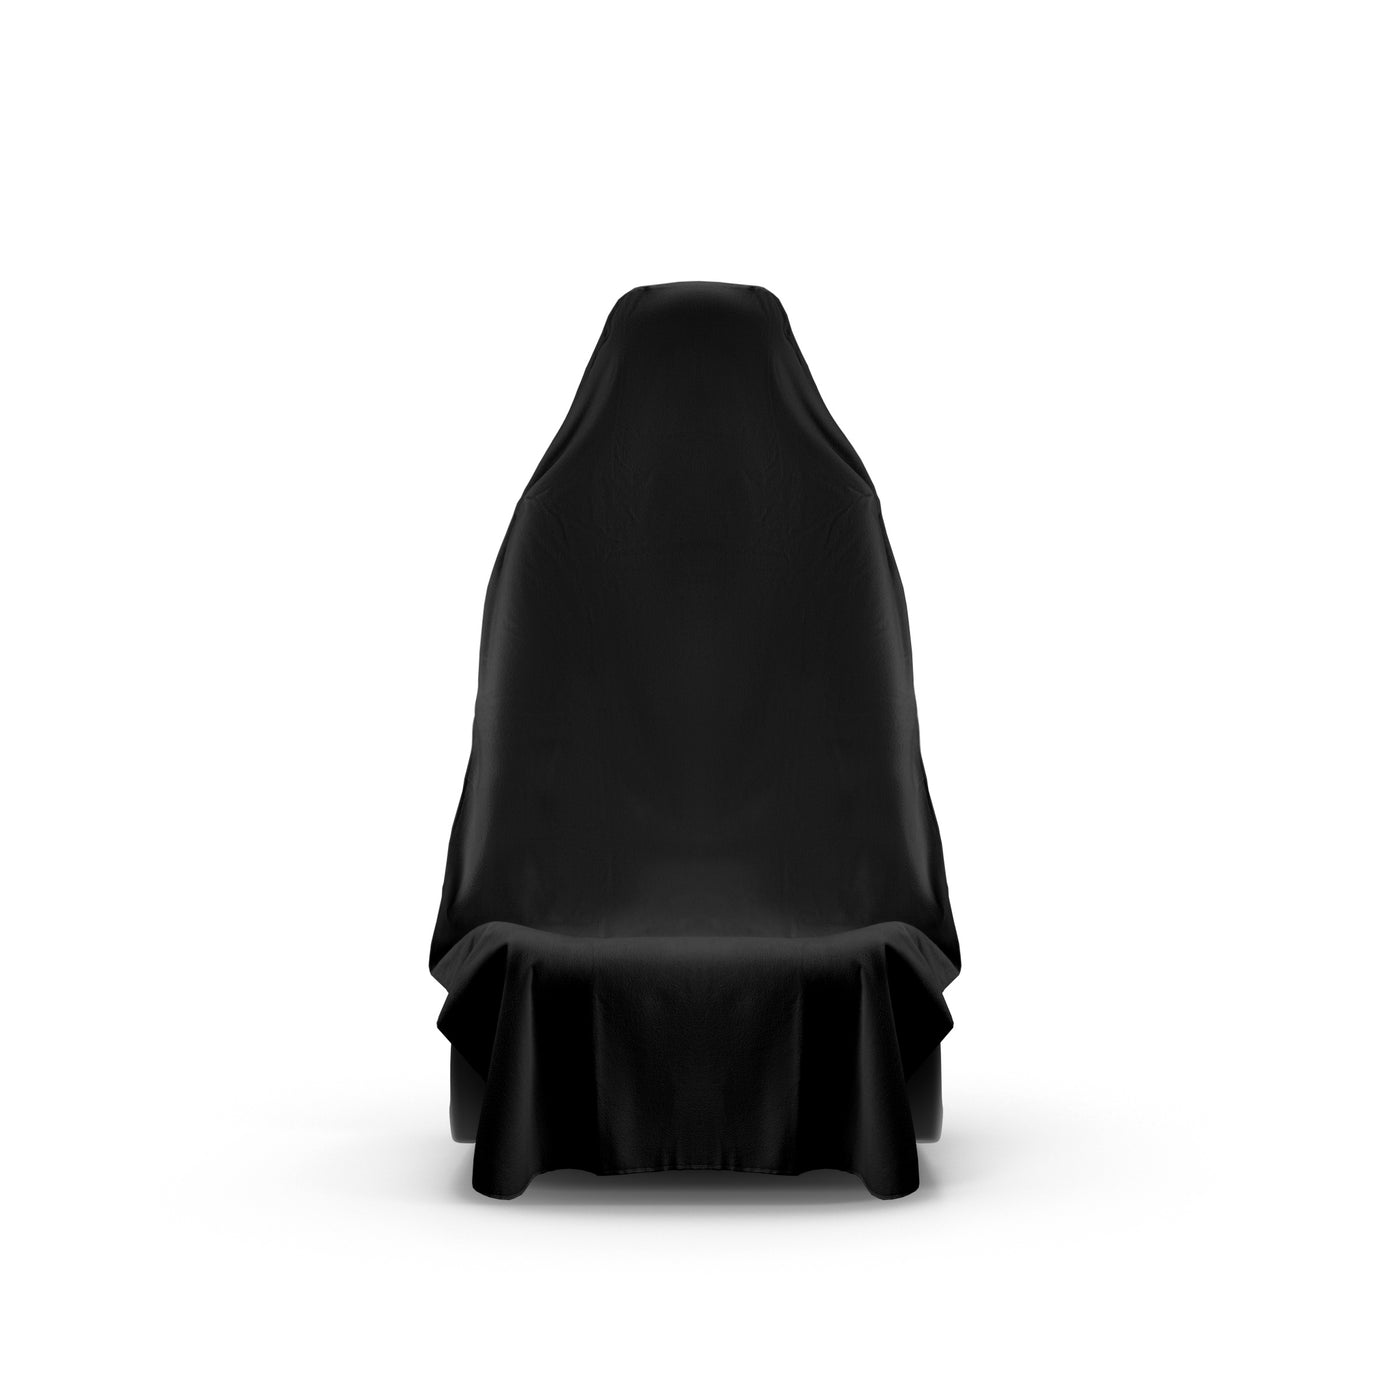 Ultrasport Seatshield - Waterproof car seat protector - Front Black